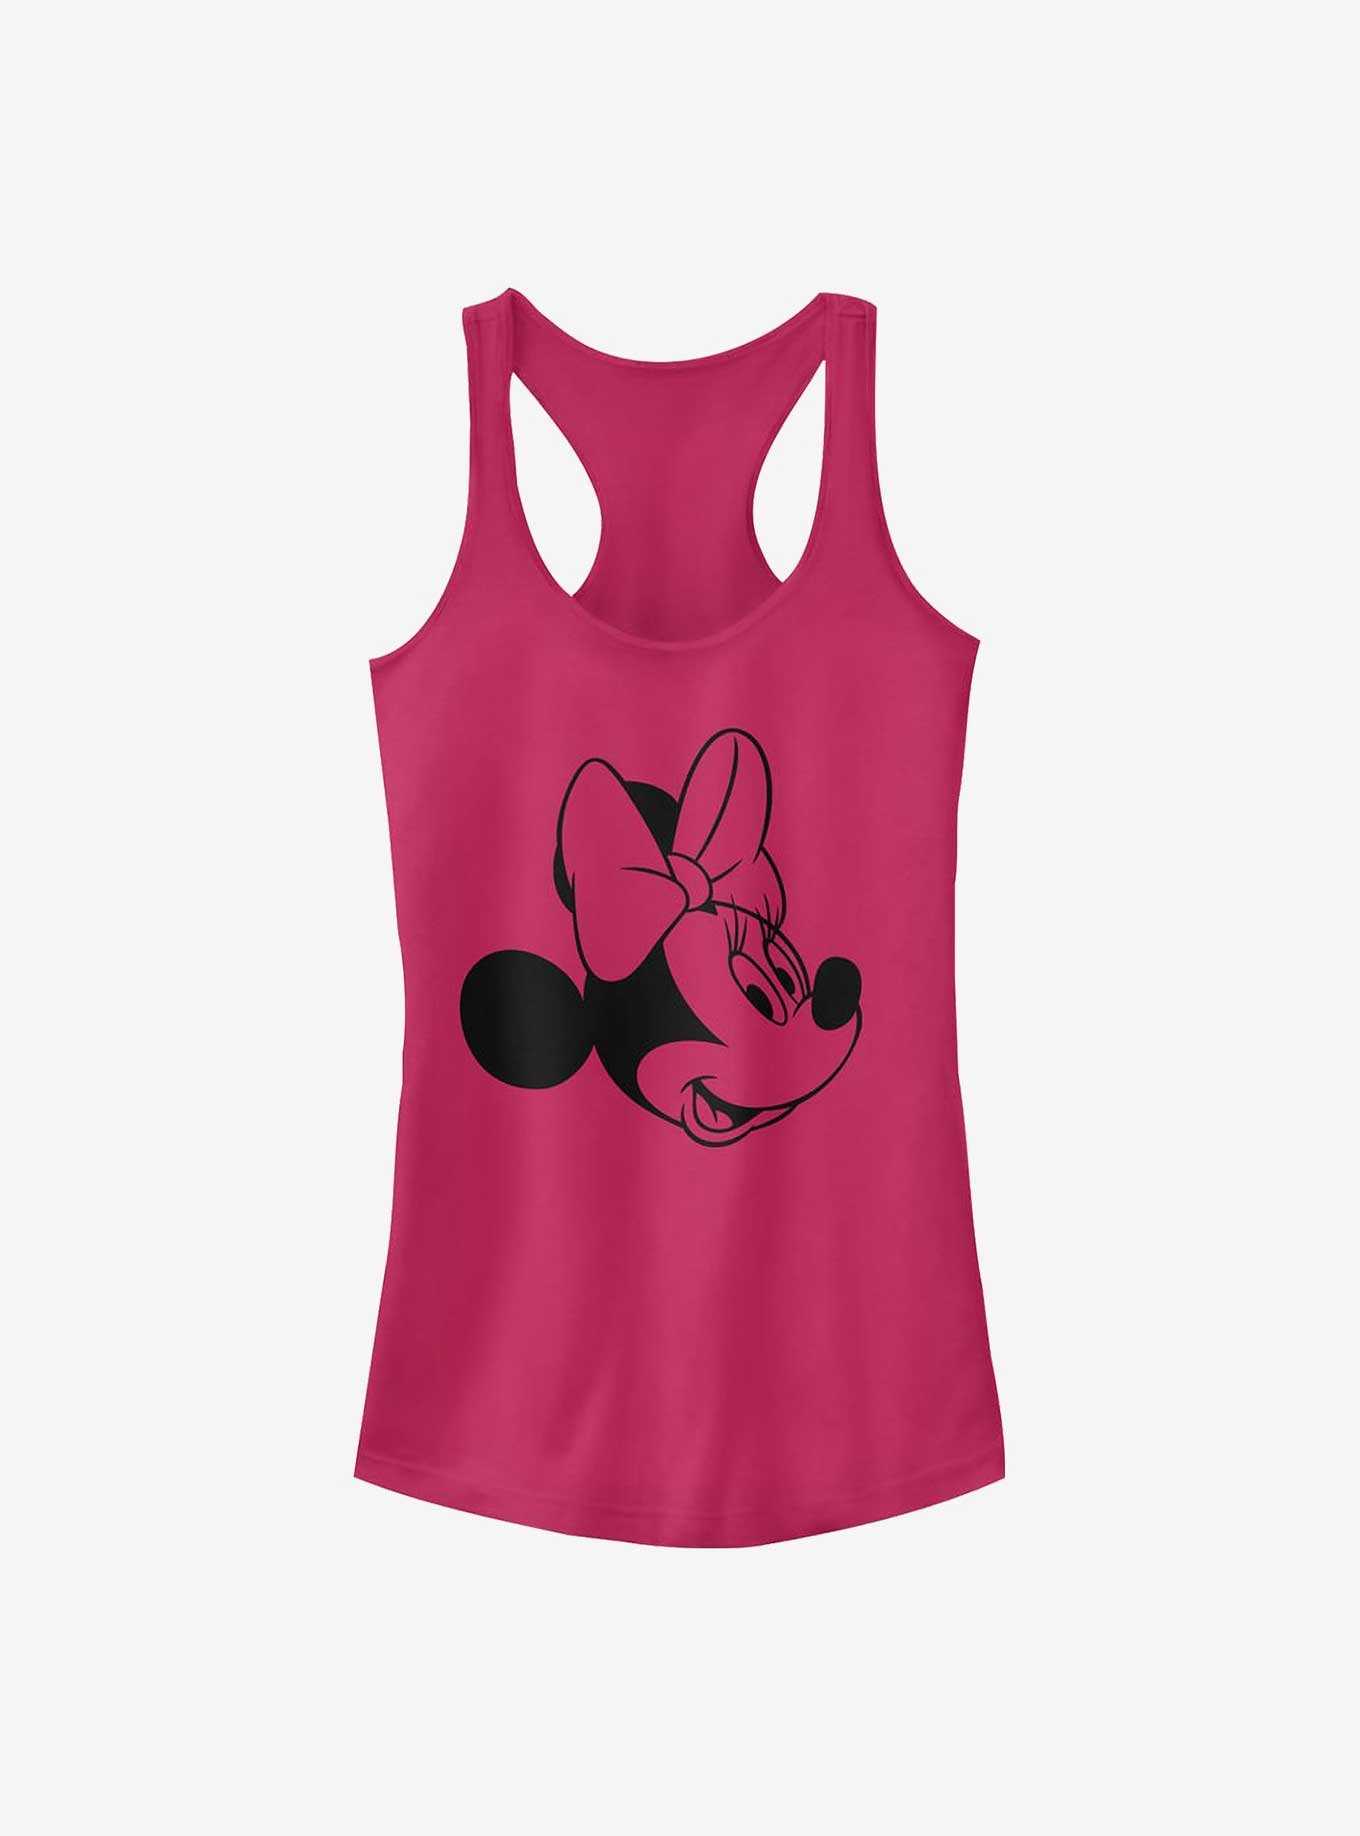 Disney Minnie Mouse Minnie Face Girls Tank, , hi-res